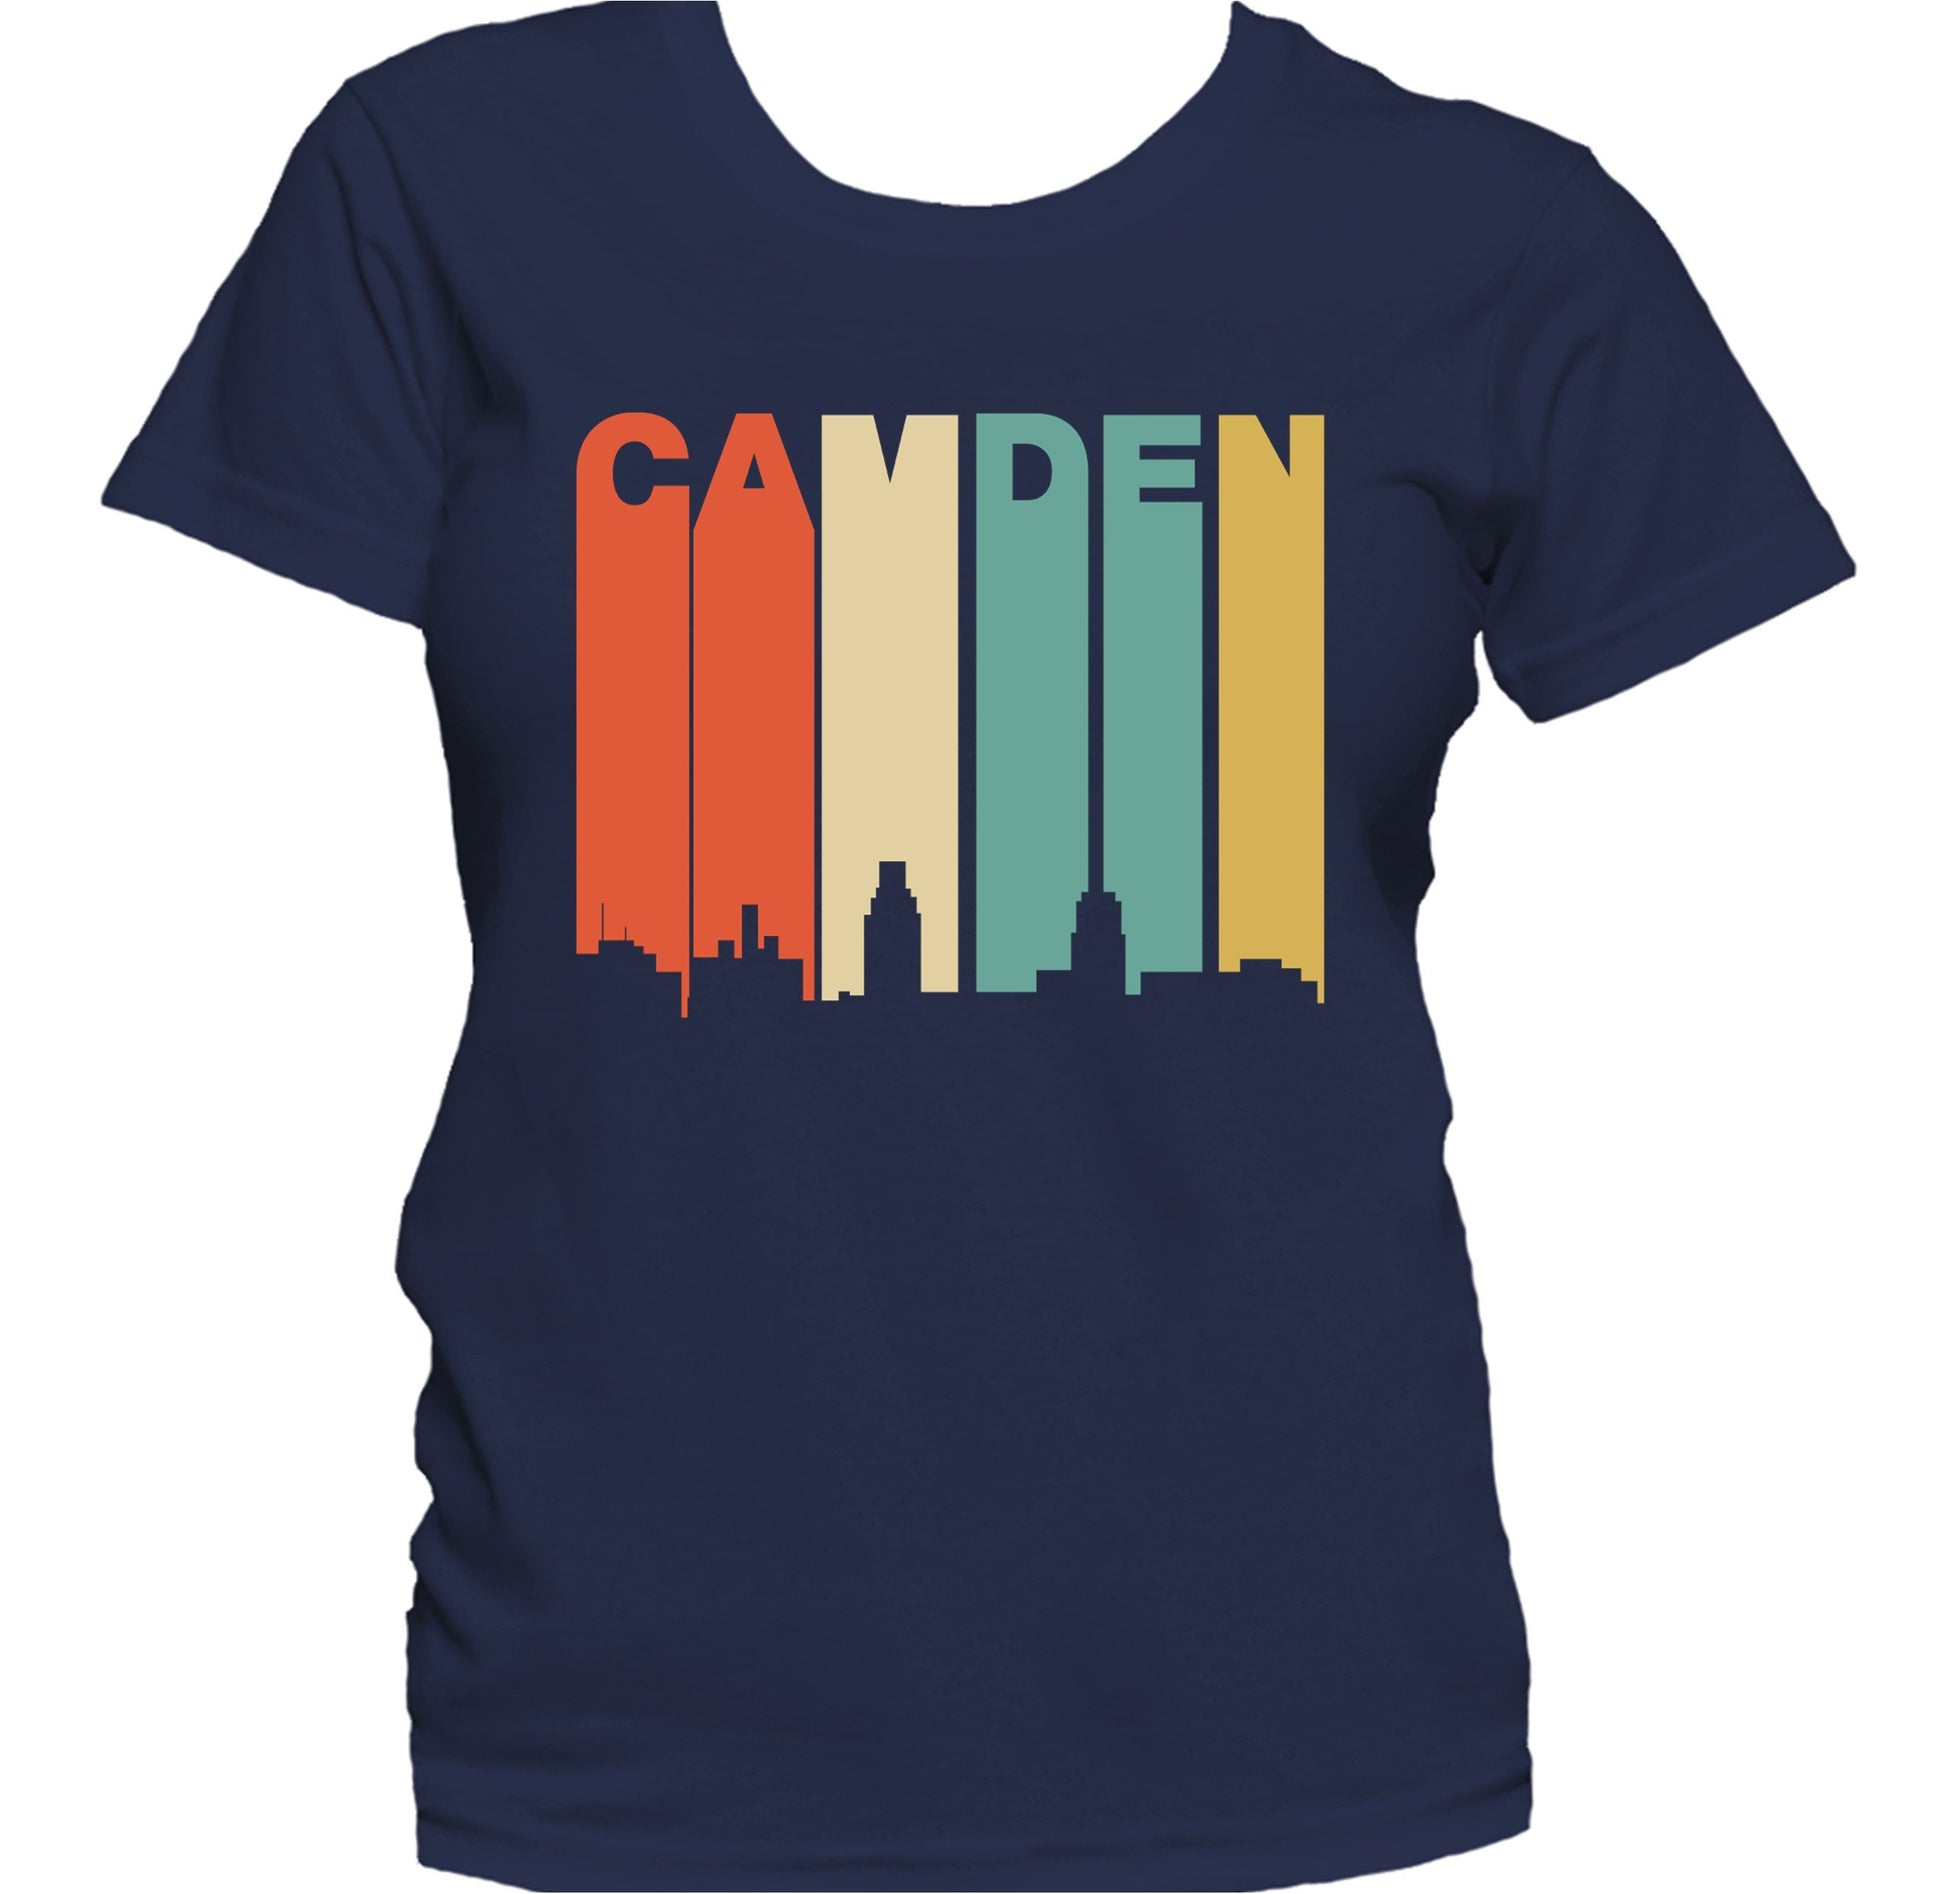 Retro 1970's Style Camden New Jersey Skyline Women's T-Shirt